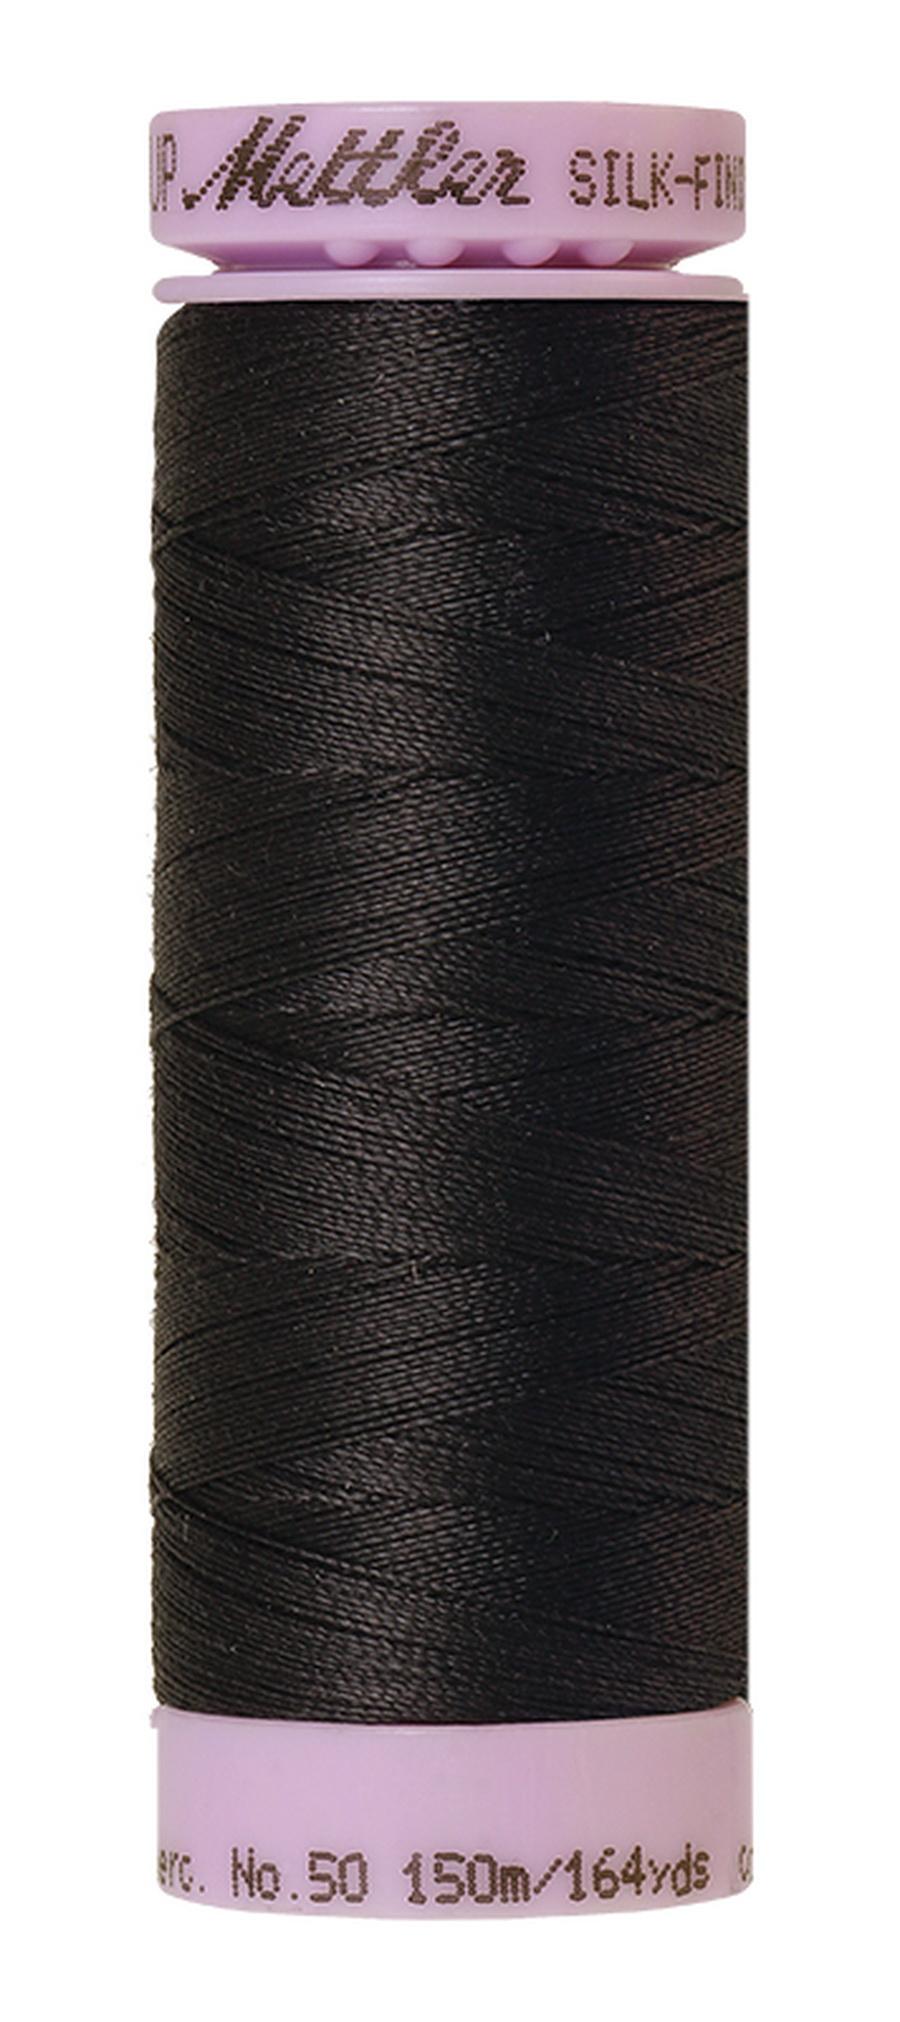 Mettler Silk-Finish 164 Yards, 50 wt. - Color Mole Gray - 100% Cotton (9105-0348)